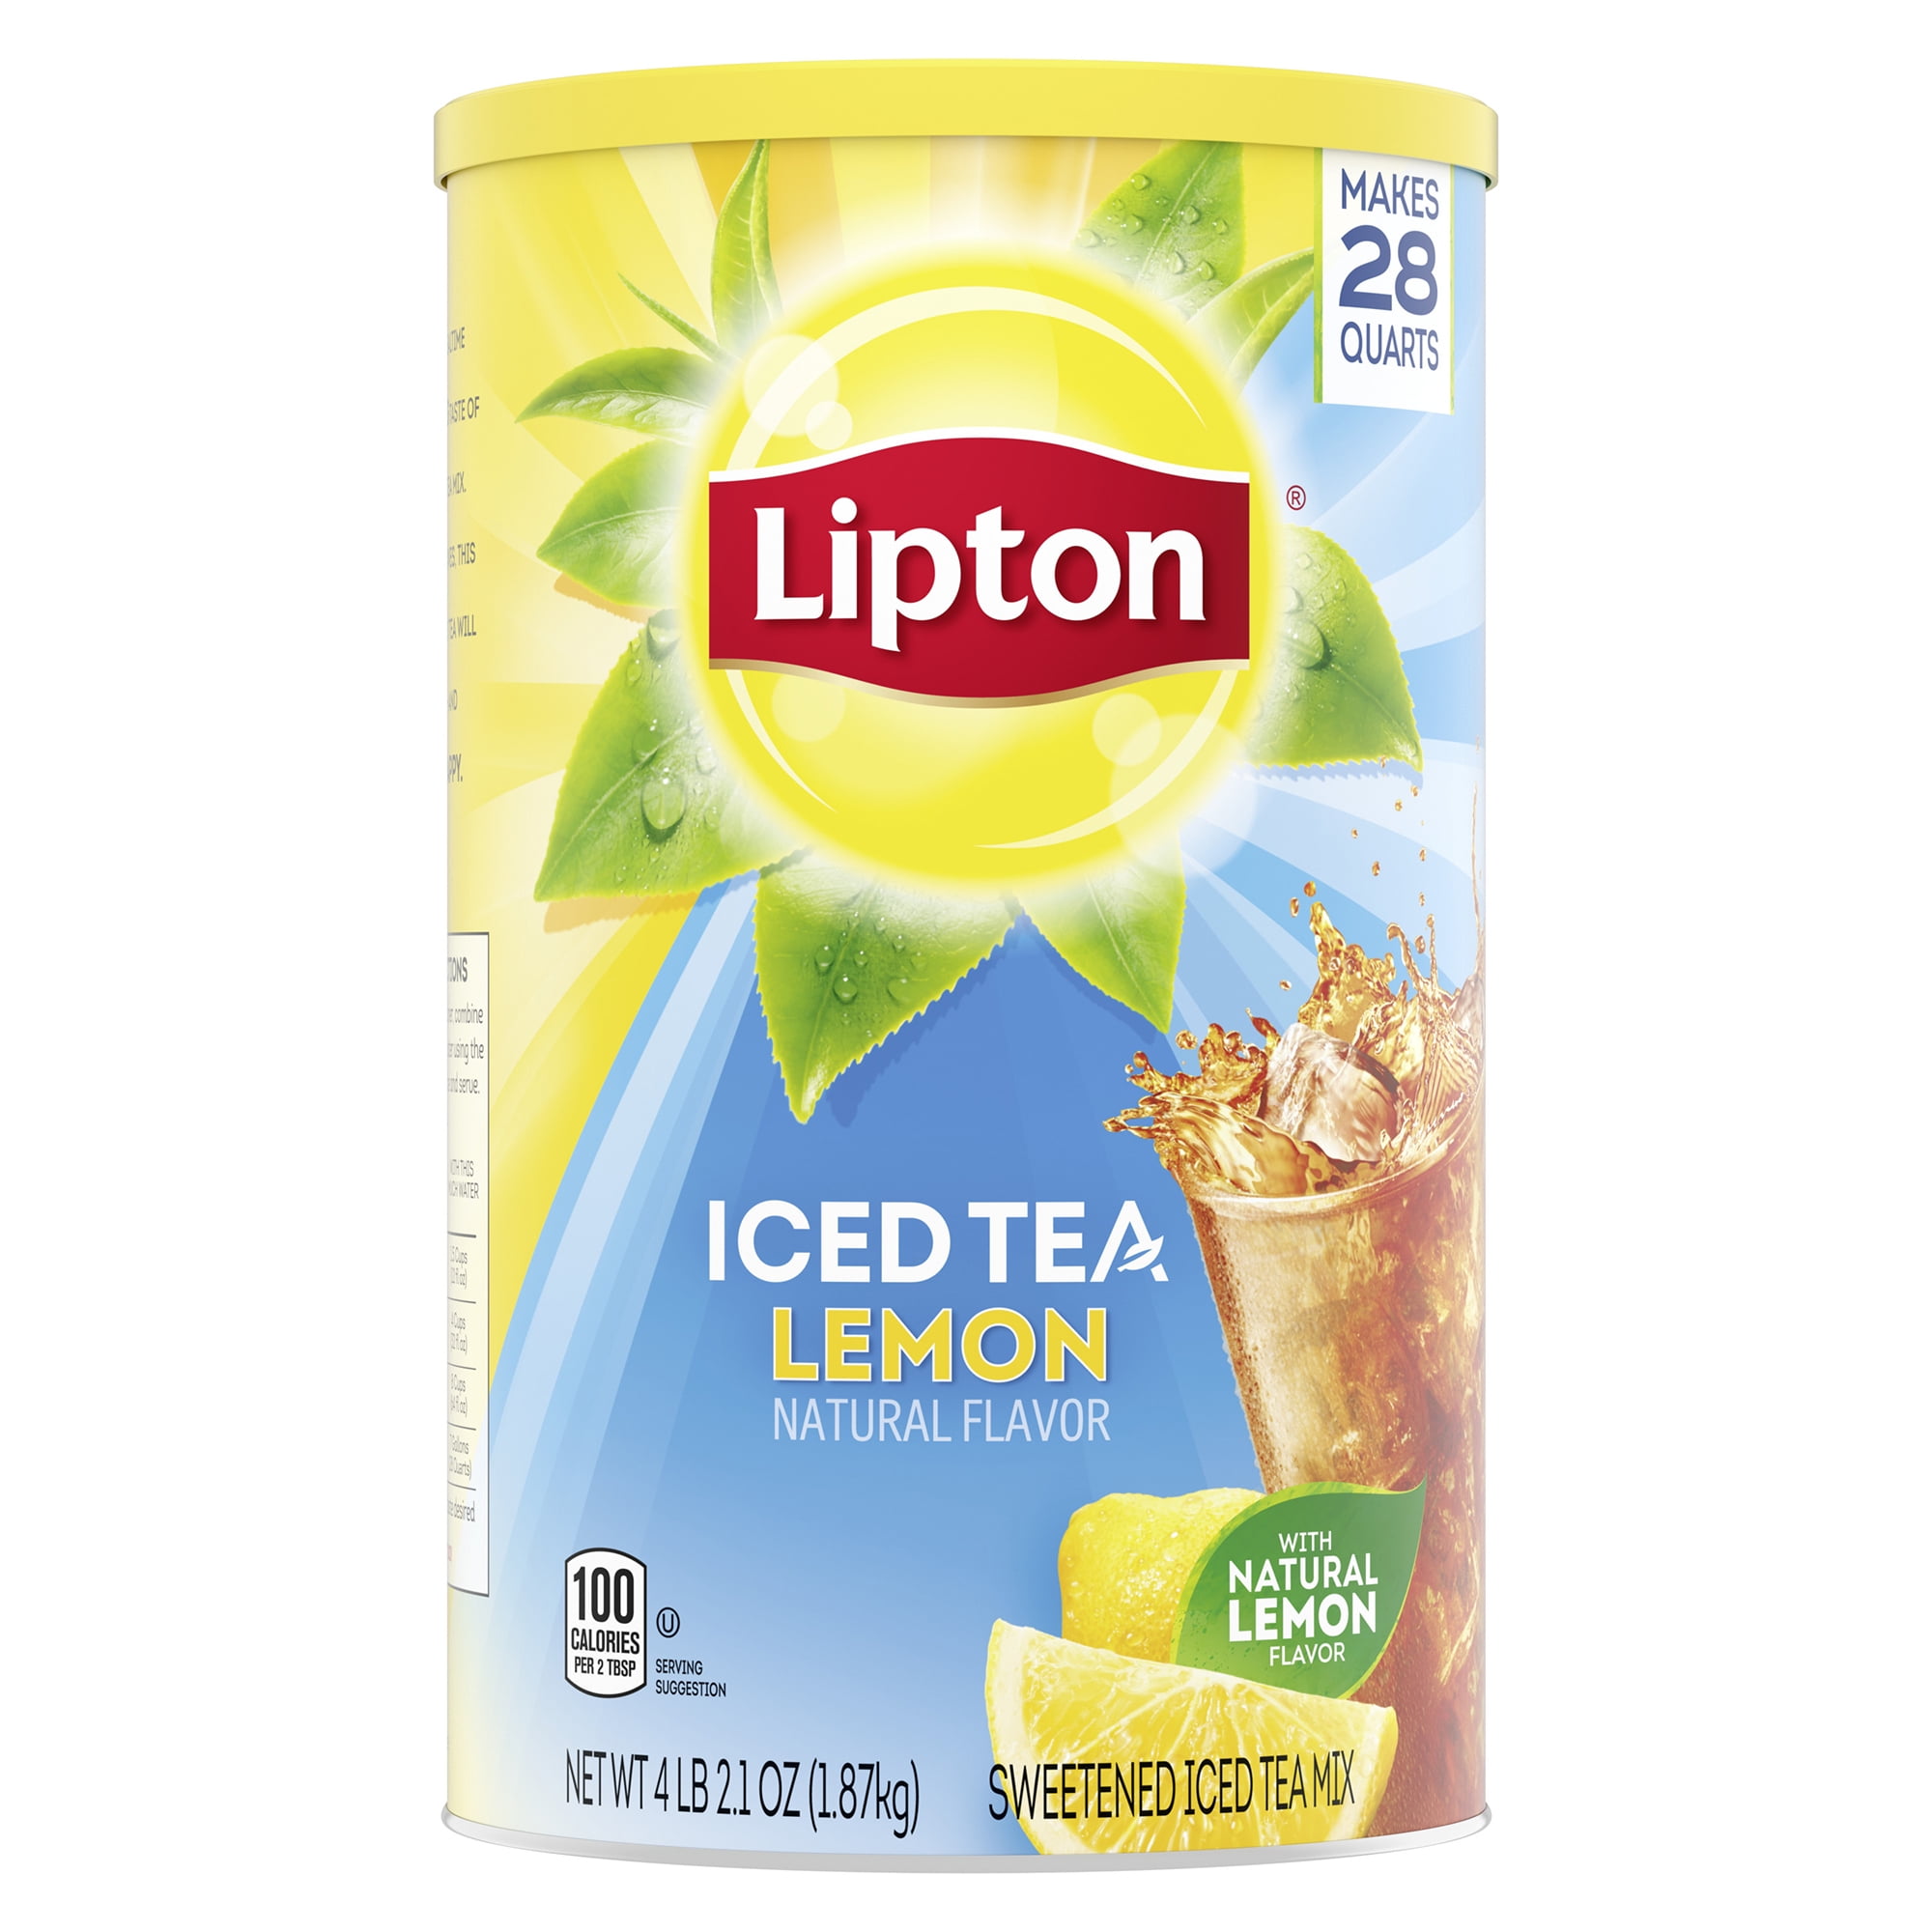 Lipton Iced Tea Mix Black Tea, Lemon, Caffeinated Makes 28 Quarts, 72 oz Can